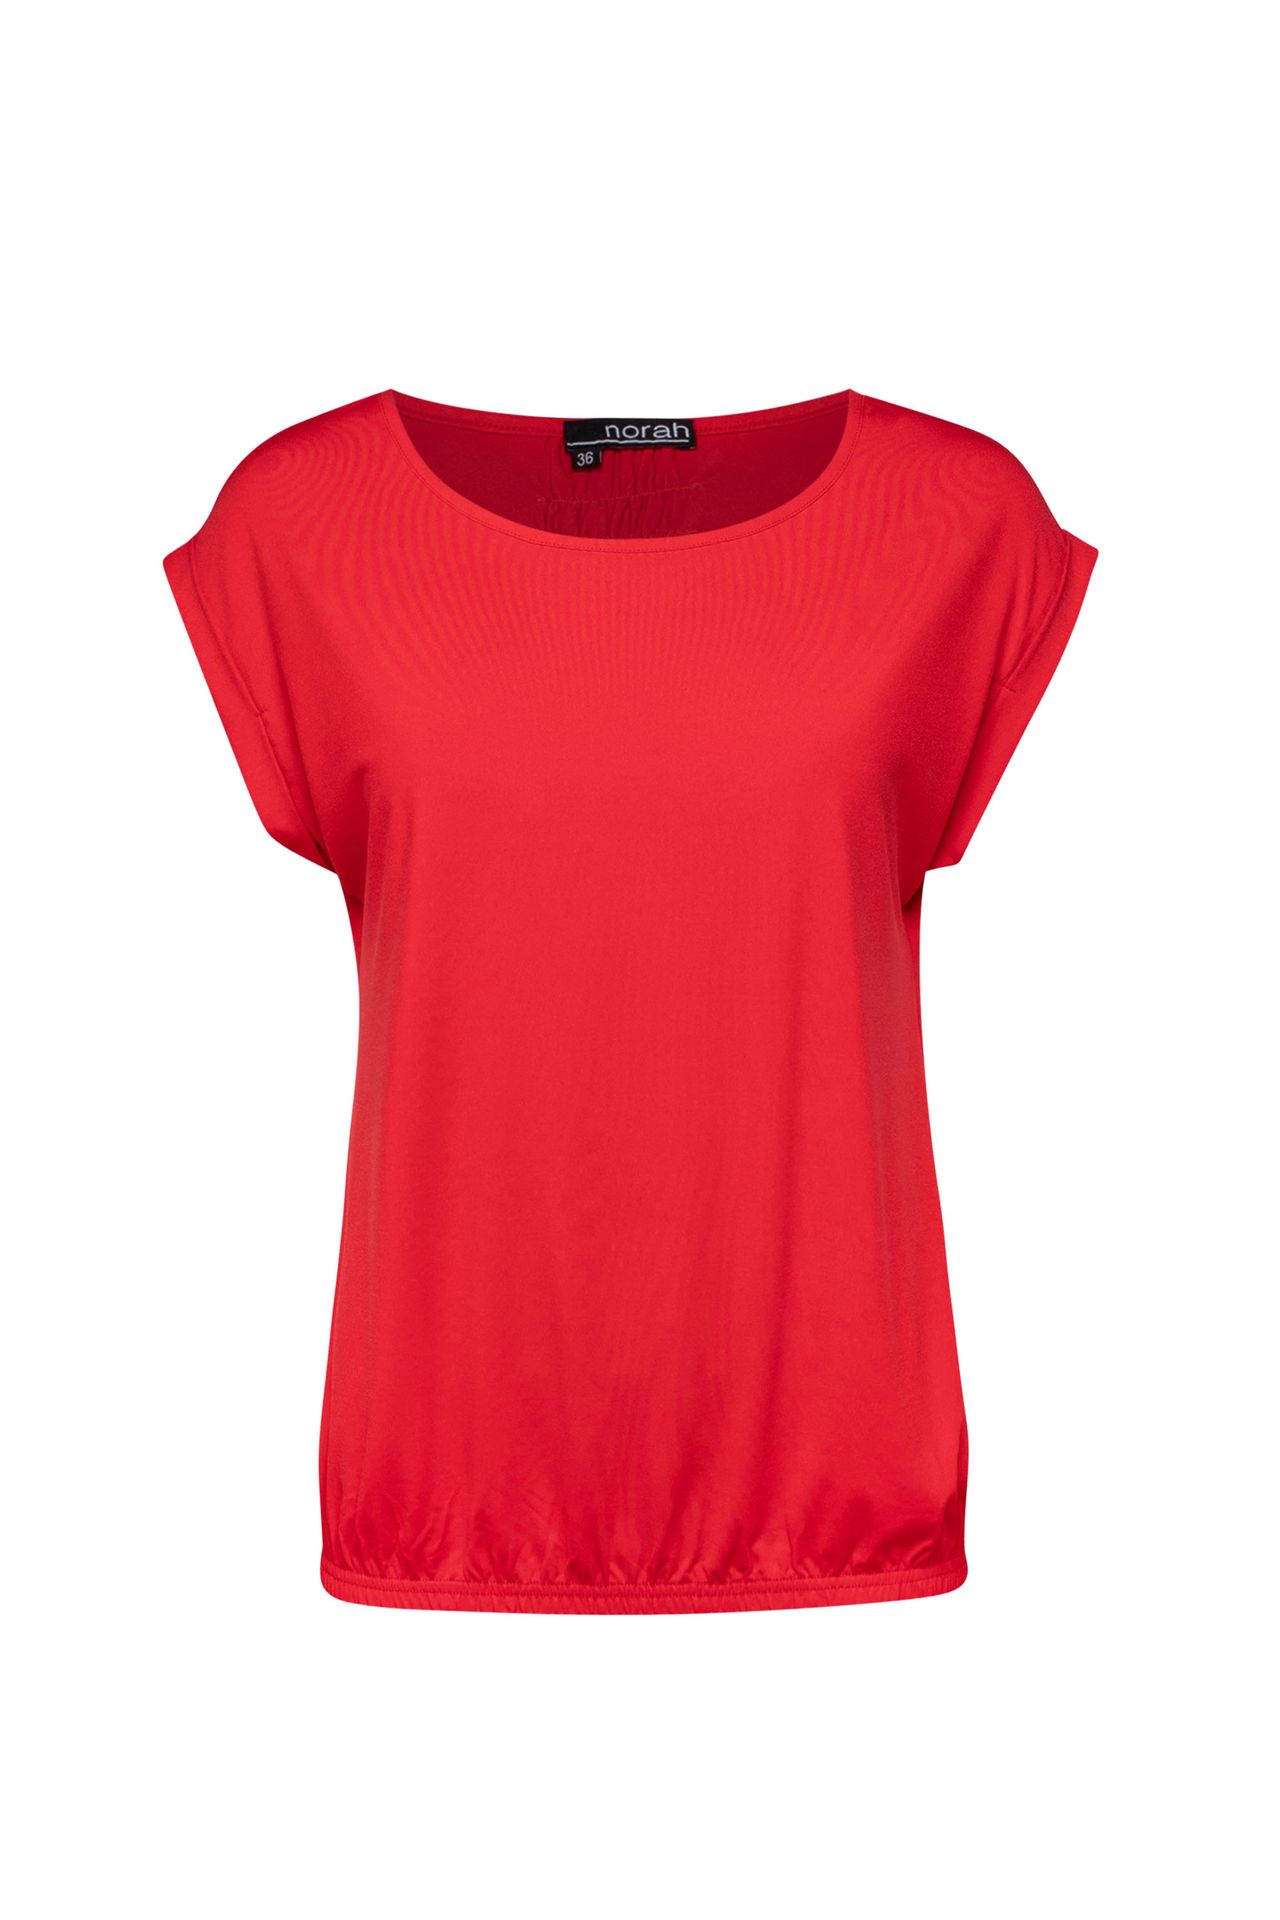 Norah Rood shirt red 210284-600